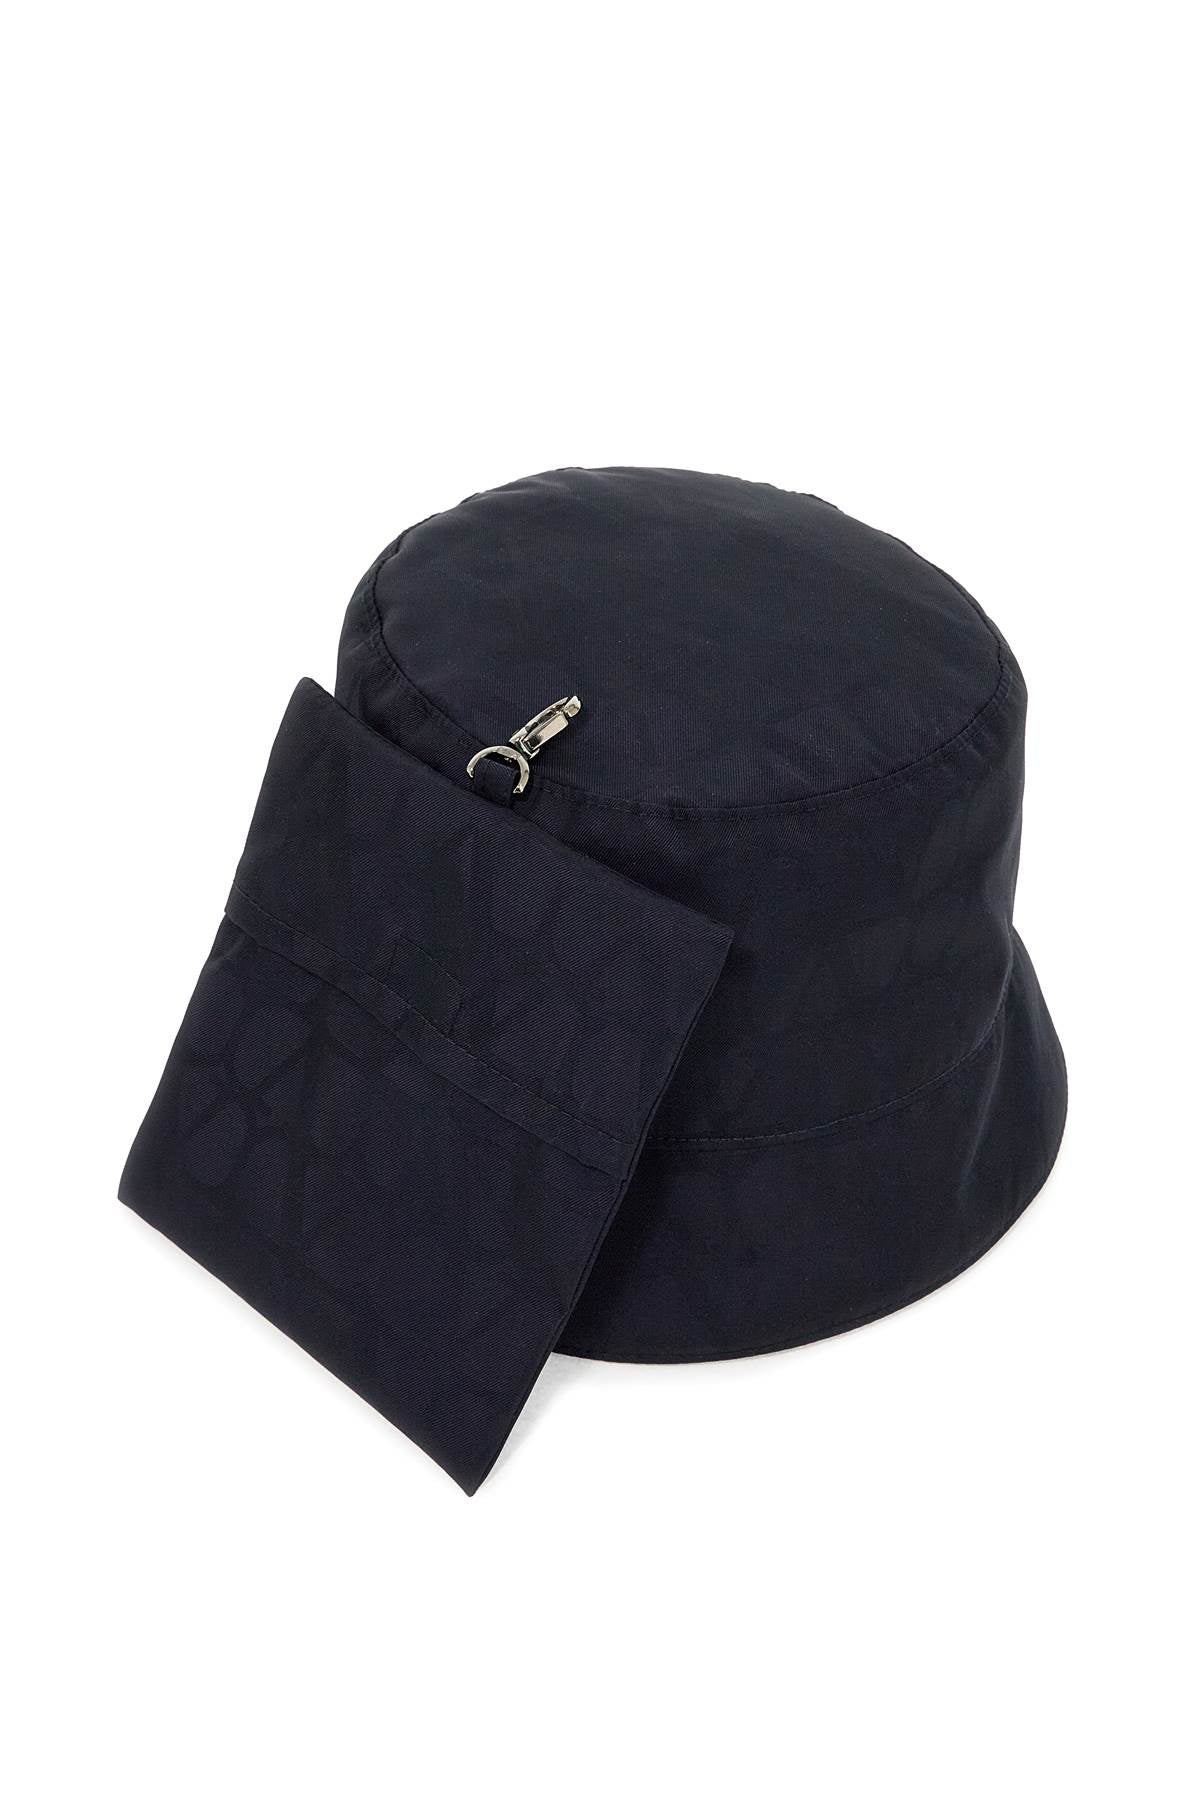 Valentino GARAVANI reversible bucket hat with pouch pocket - Blue